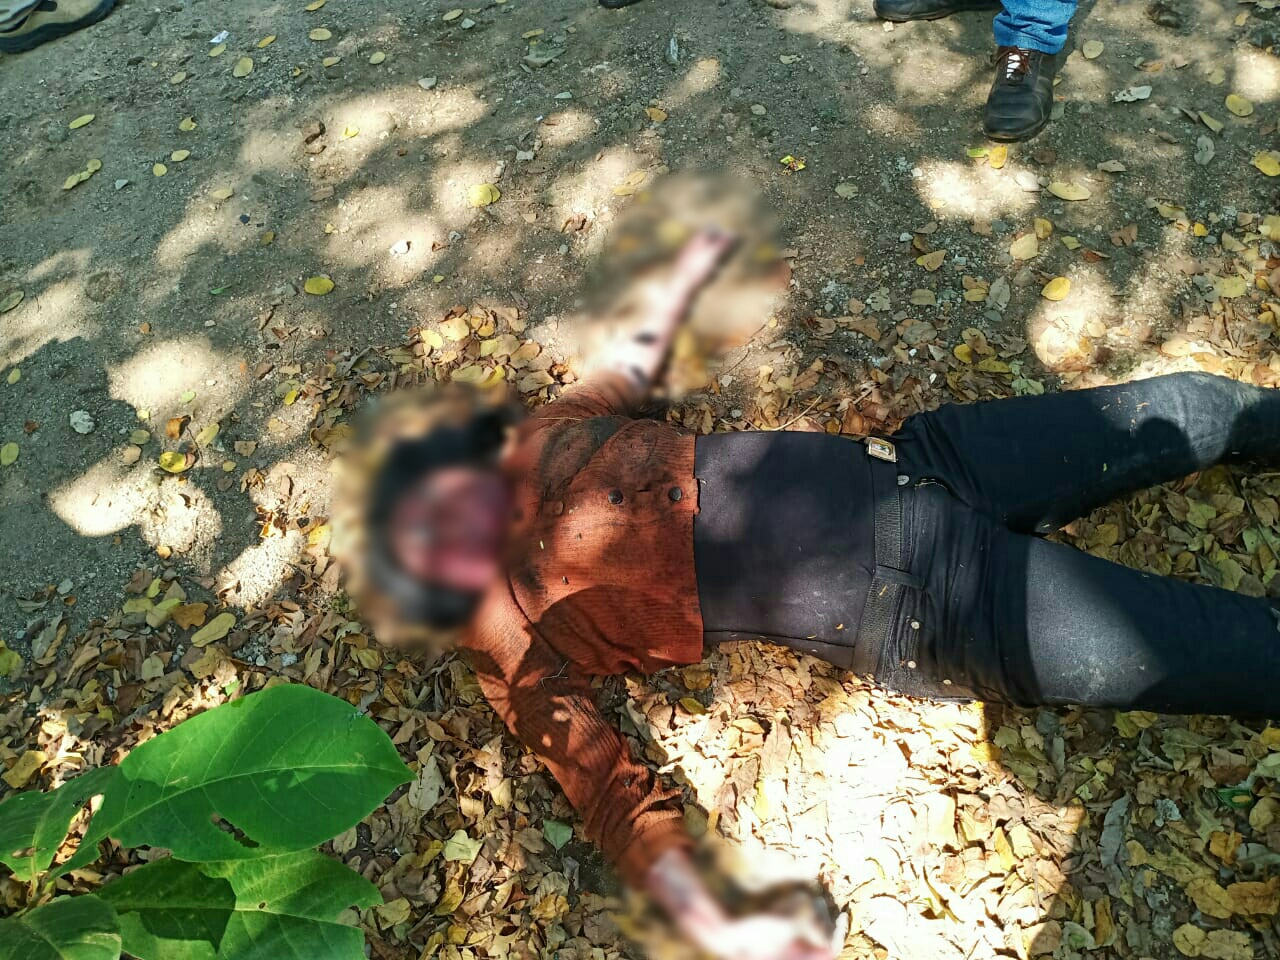 Sesosok mayat perempuan tanpa identitas ditemukan tergeletak di pingiran empang, Kecamatan Karawaci, Kota Tangerang, Selasa (16/6/2020).